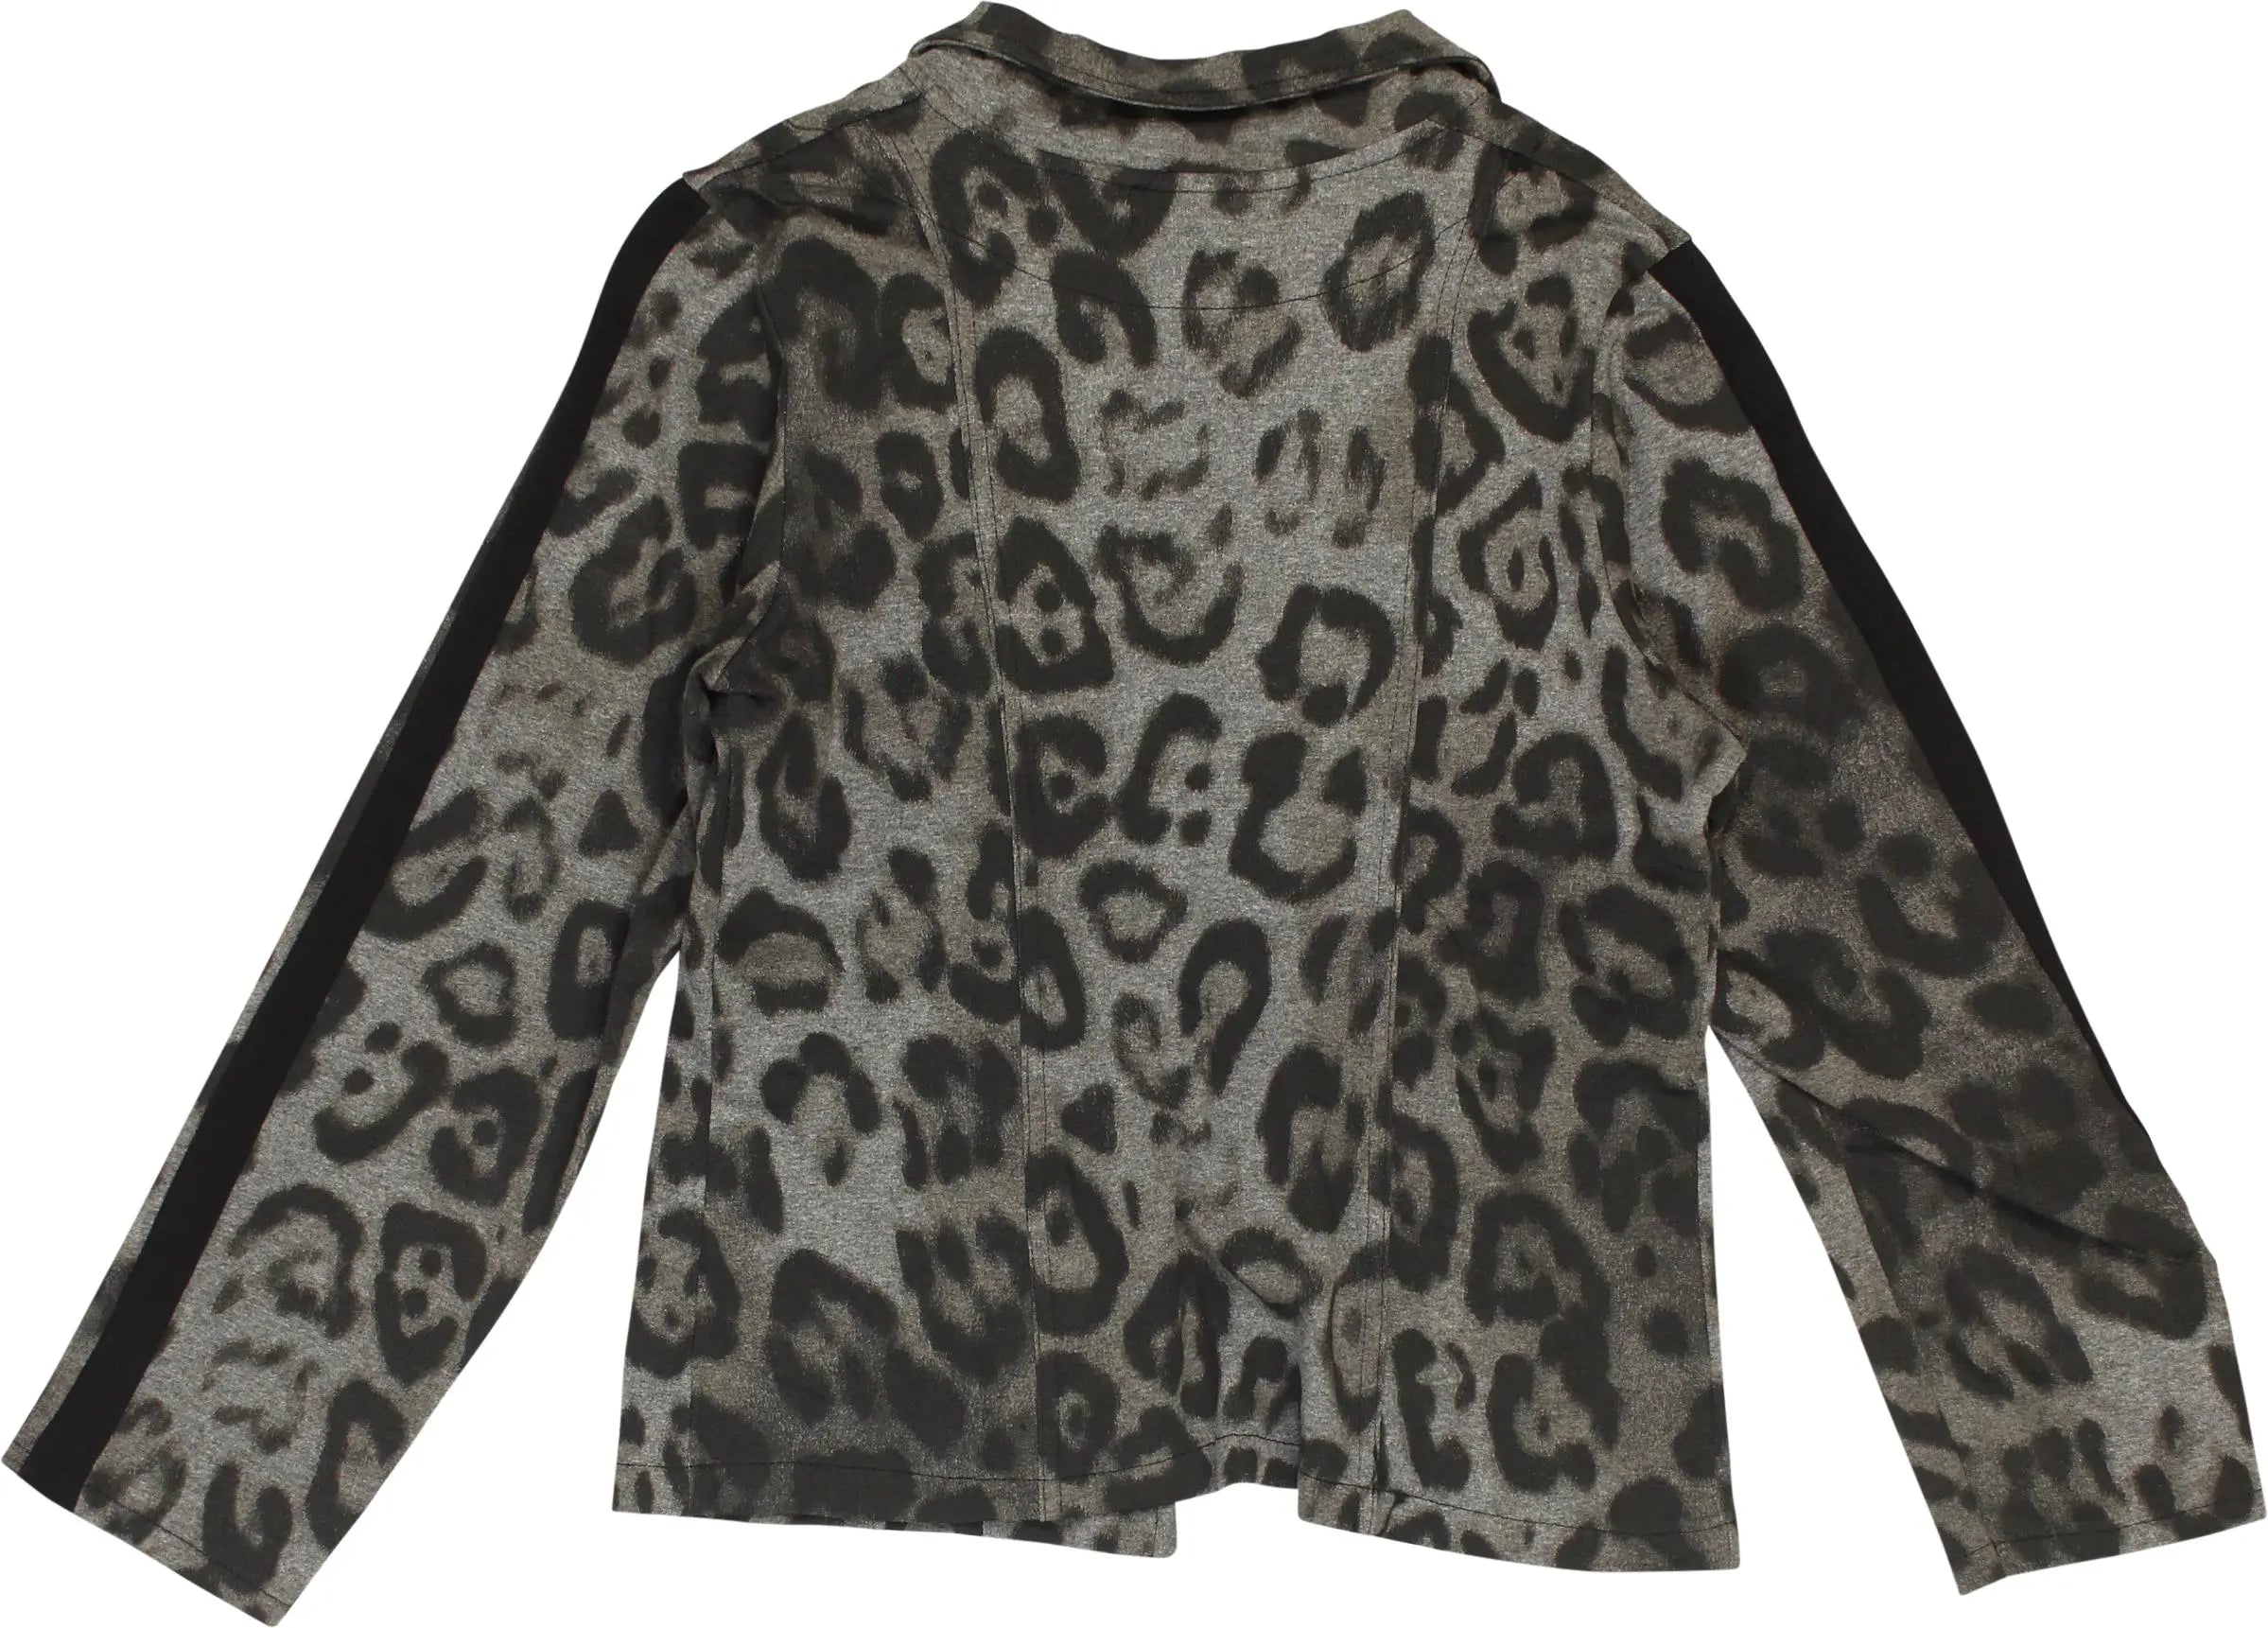 Sensi Wear - Leopard Print Blazer- ThriftTale.com - Vintage and second handclothing